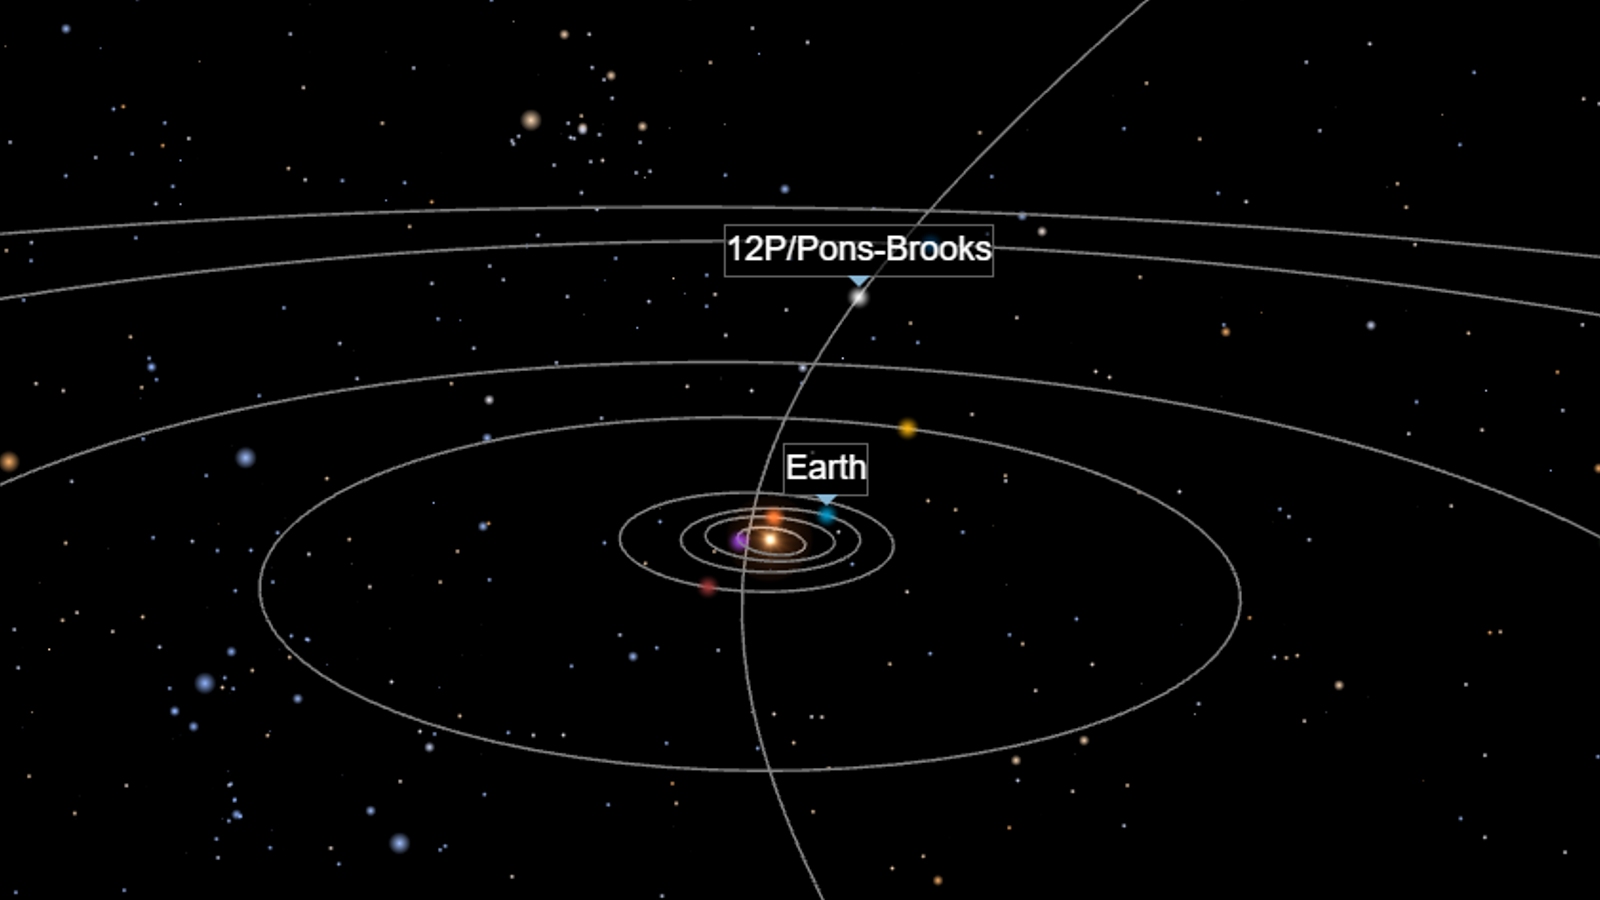 Комета понса брукса когда будет видна. Комета 12p Pons-Brooks. Размеры комет. Комета Понса Брукса. Комета Pons-Brooks Orbit.